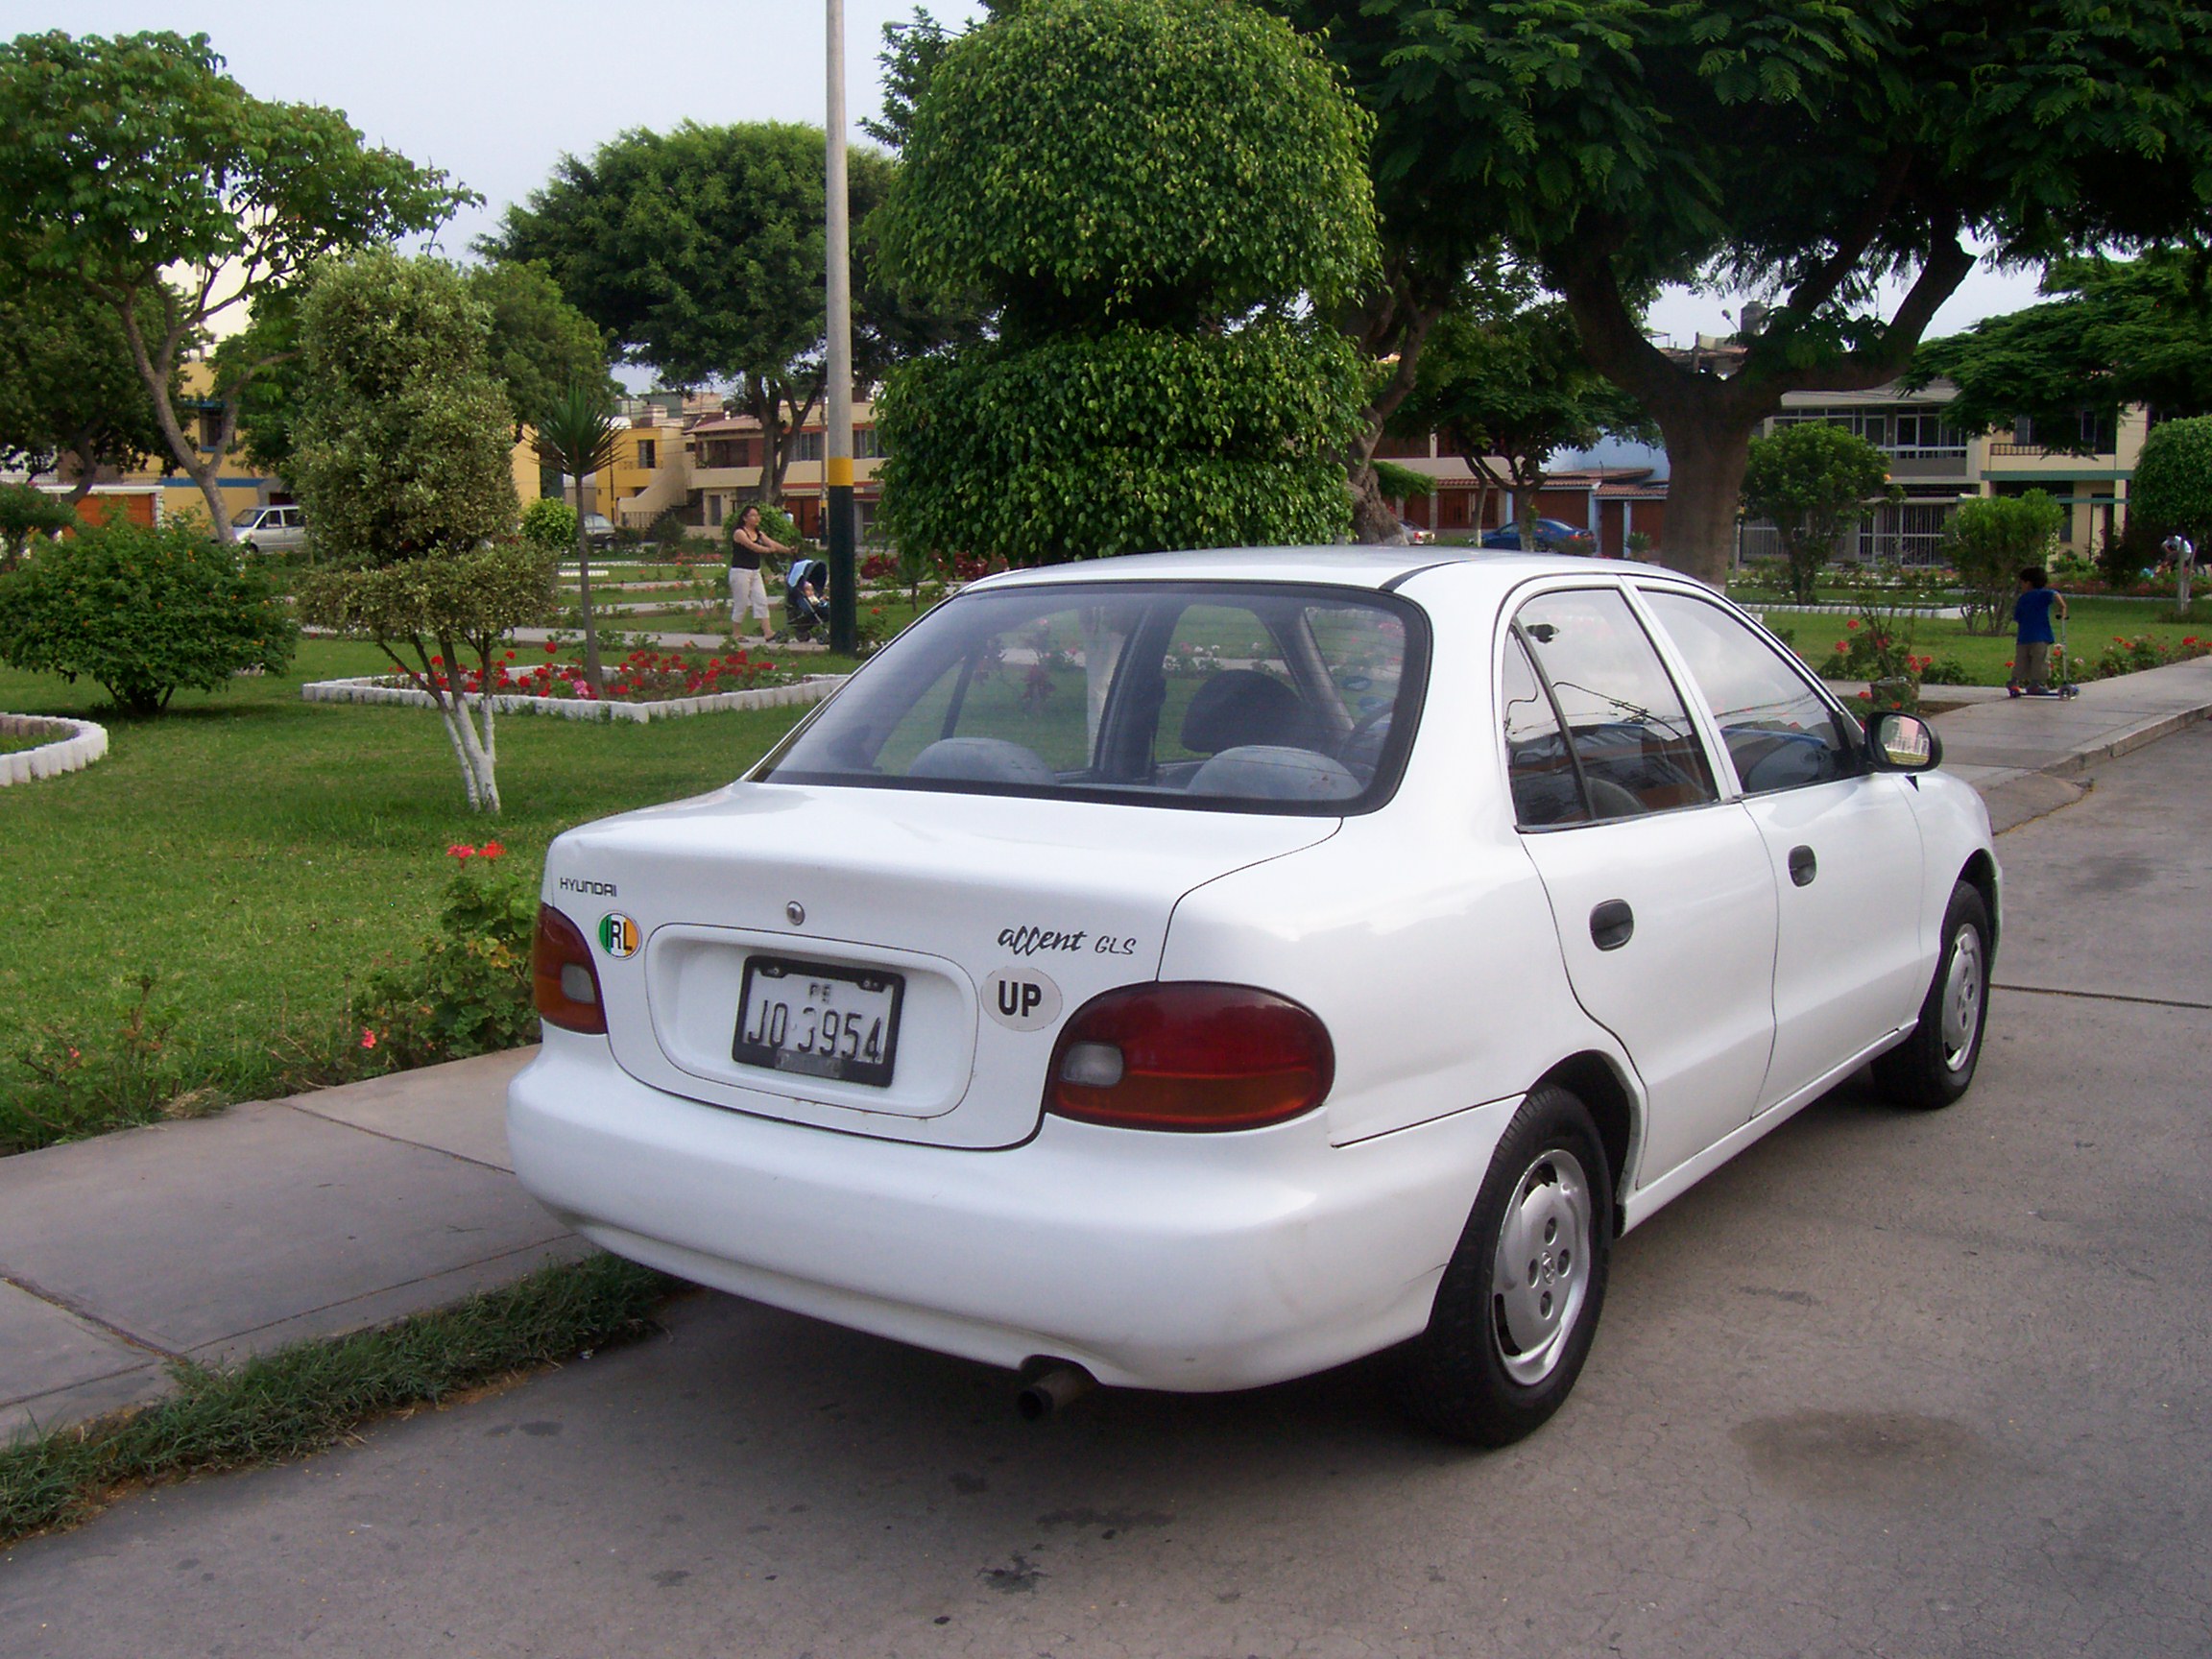 1995 Hyundai Accent Information and photos MOMENTcar